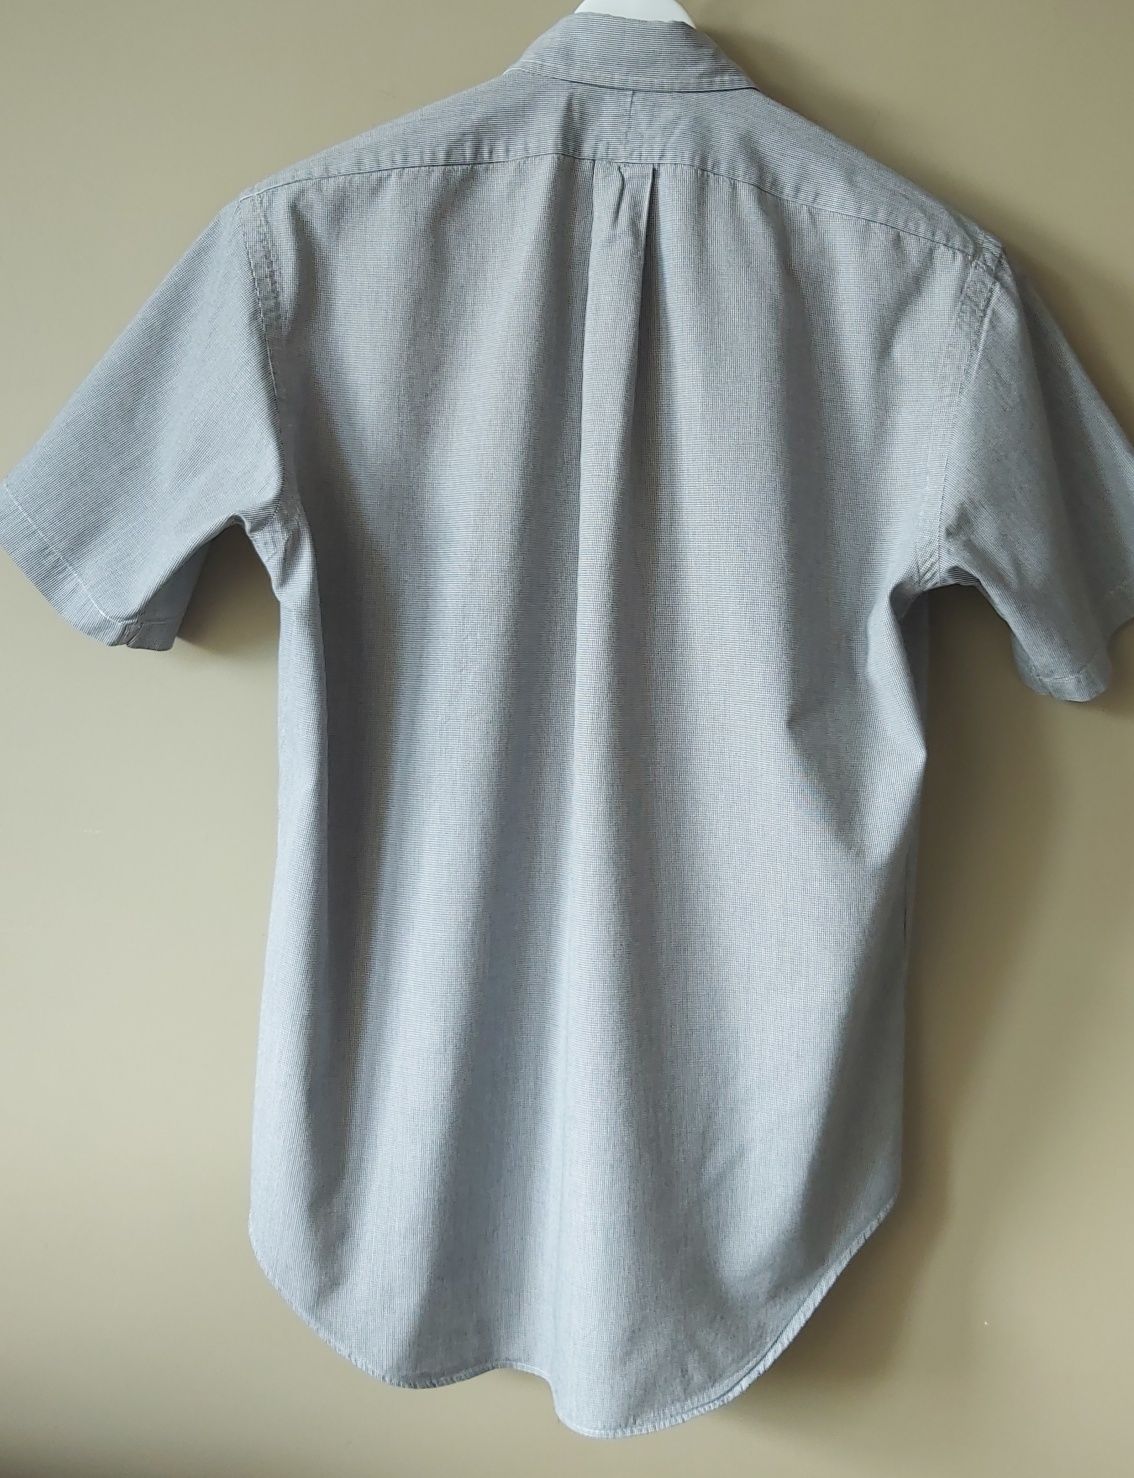 Ralph Lauren koszula S-M      100% cotton